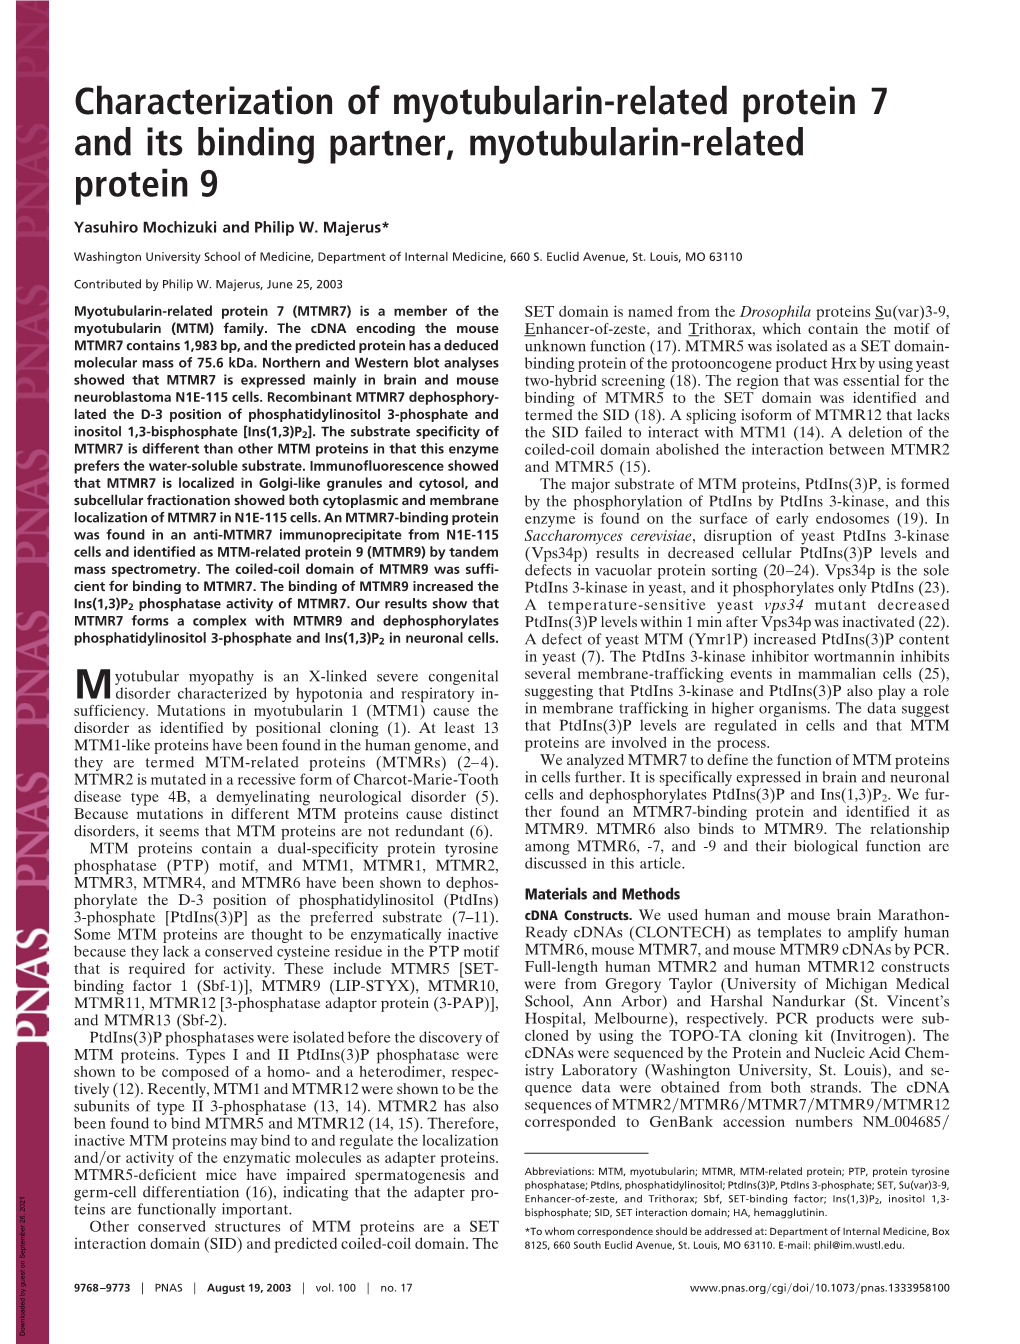 Characterization of Myotubularin-Related Protein 7 and Its Binding Partner, Myotubularin-Related Protein 9